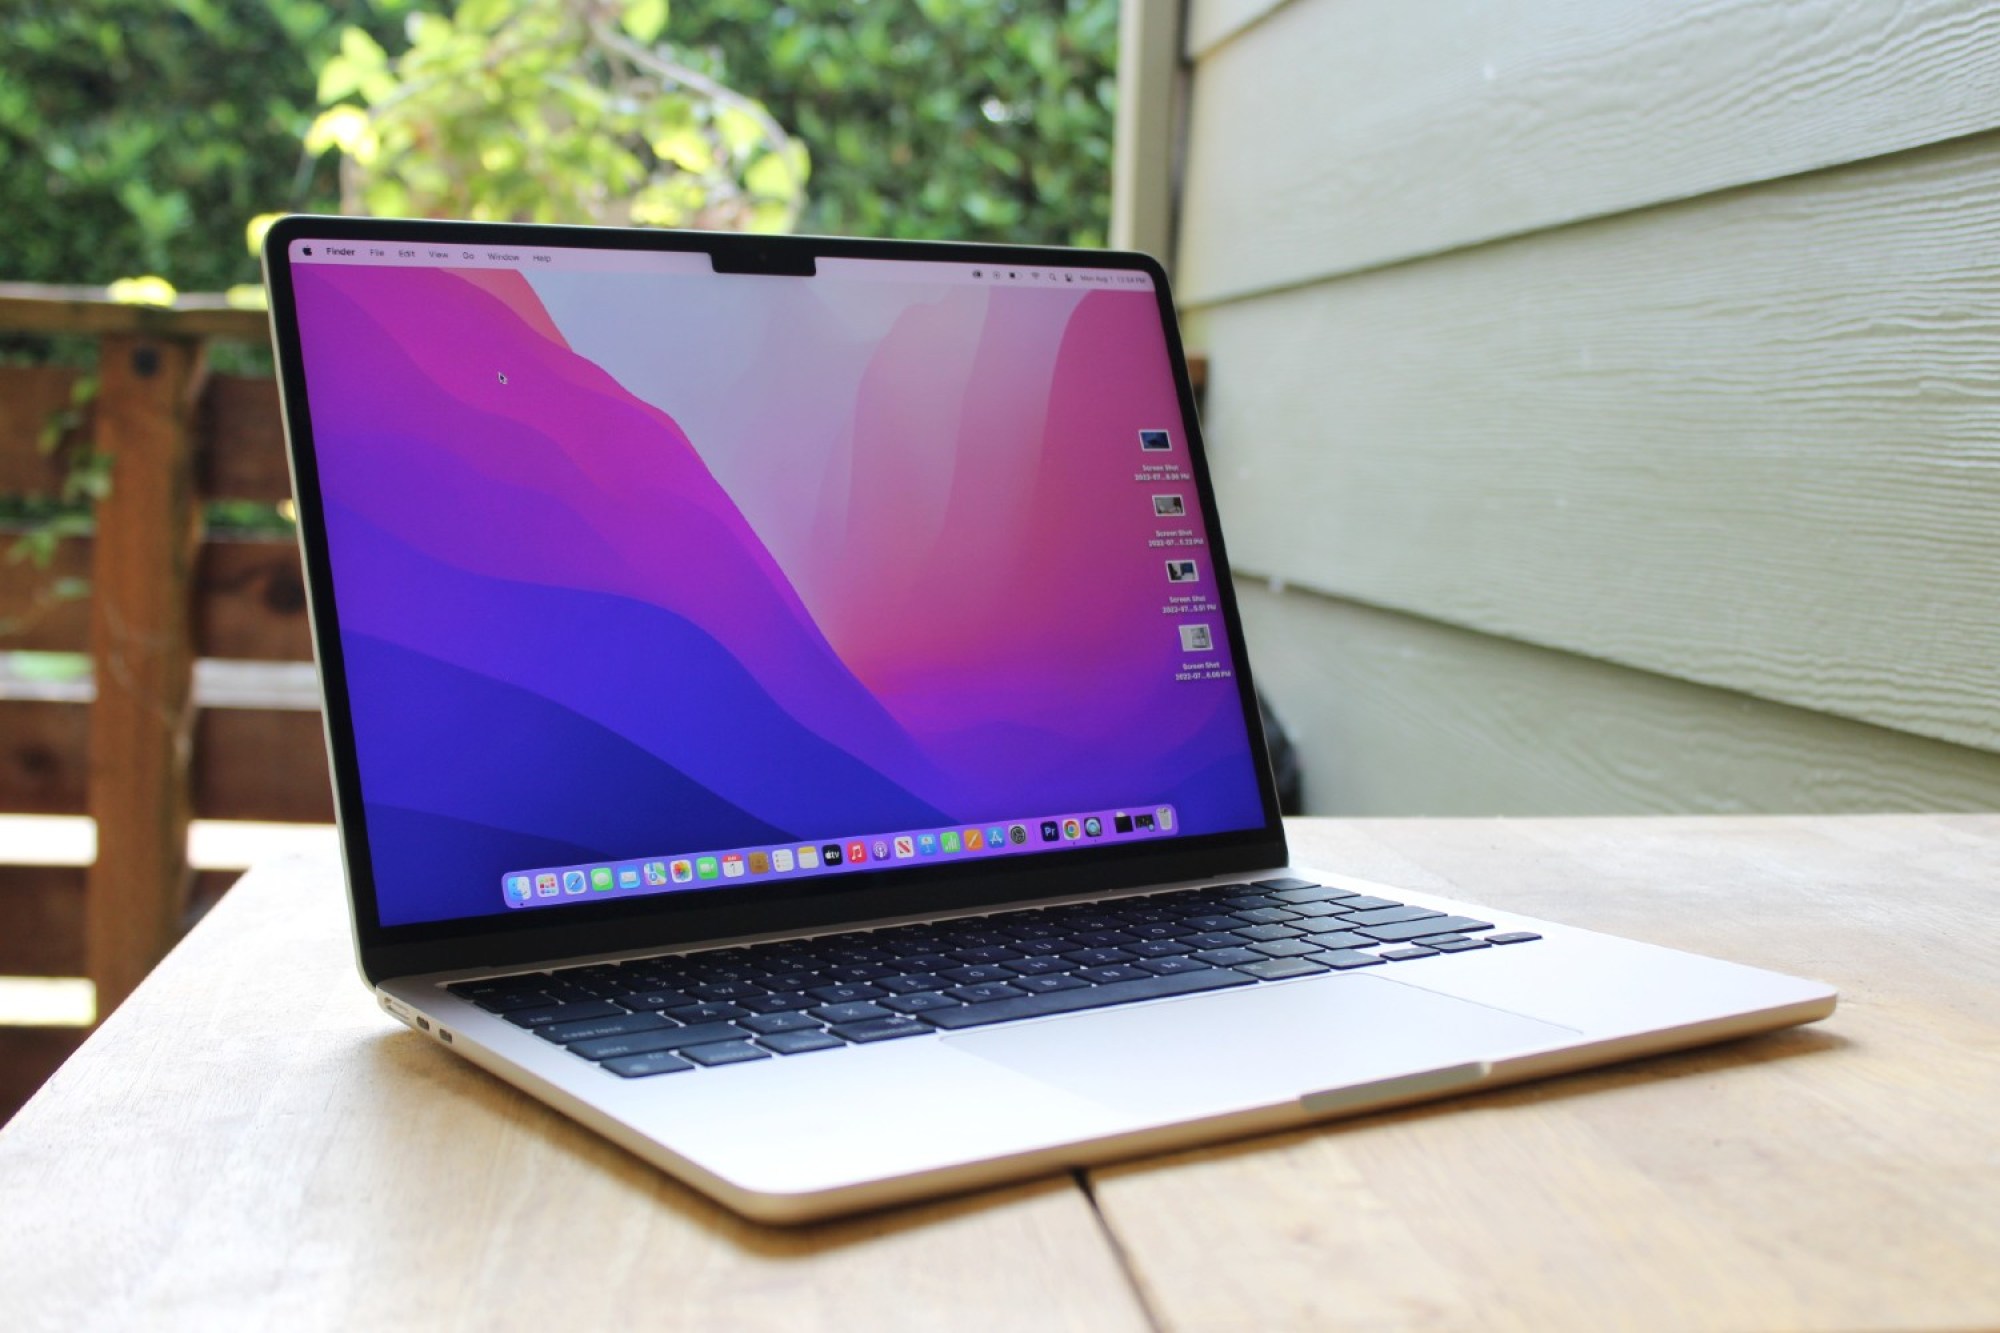 M1 Macs Support WiFi 6, MacBook Air Has Updated Function Keys